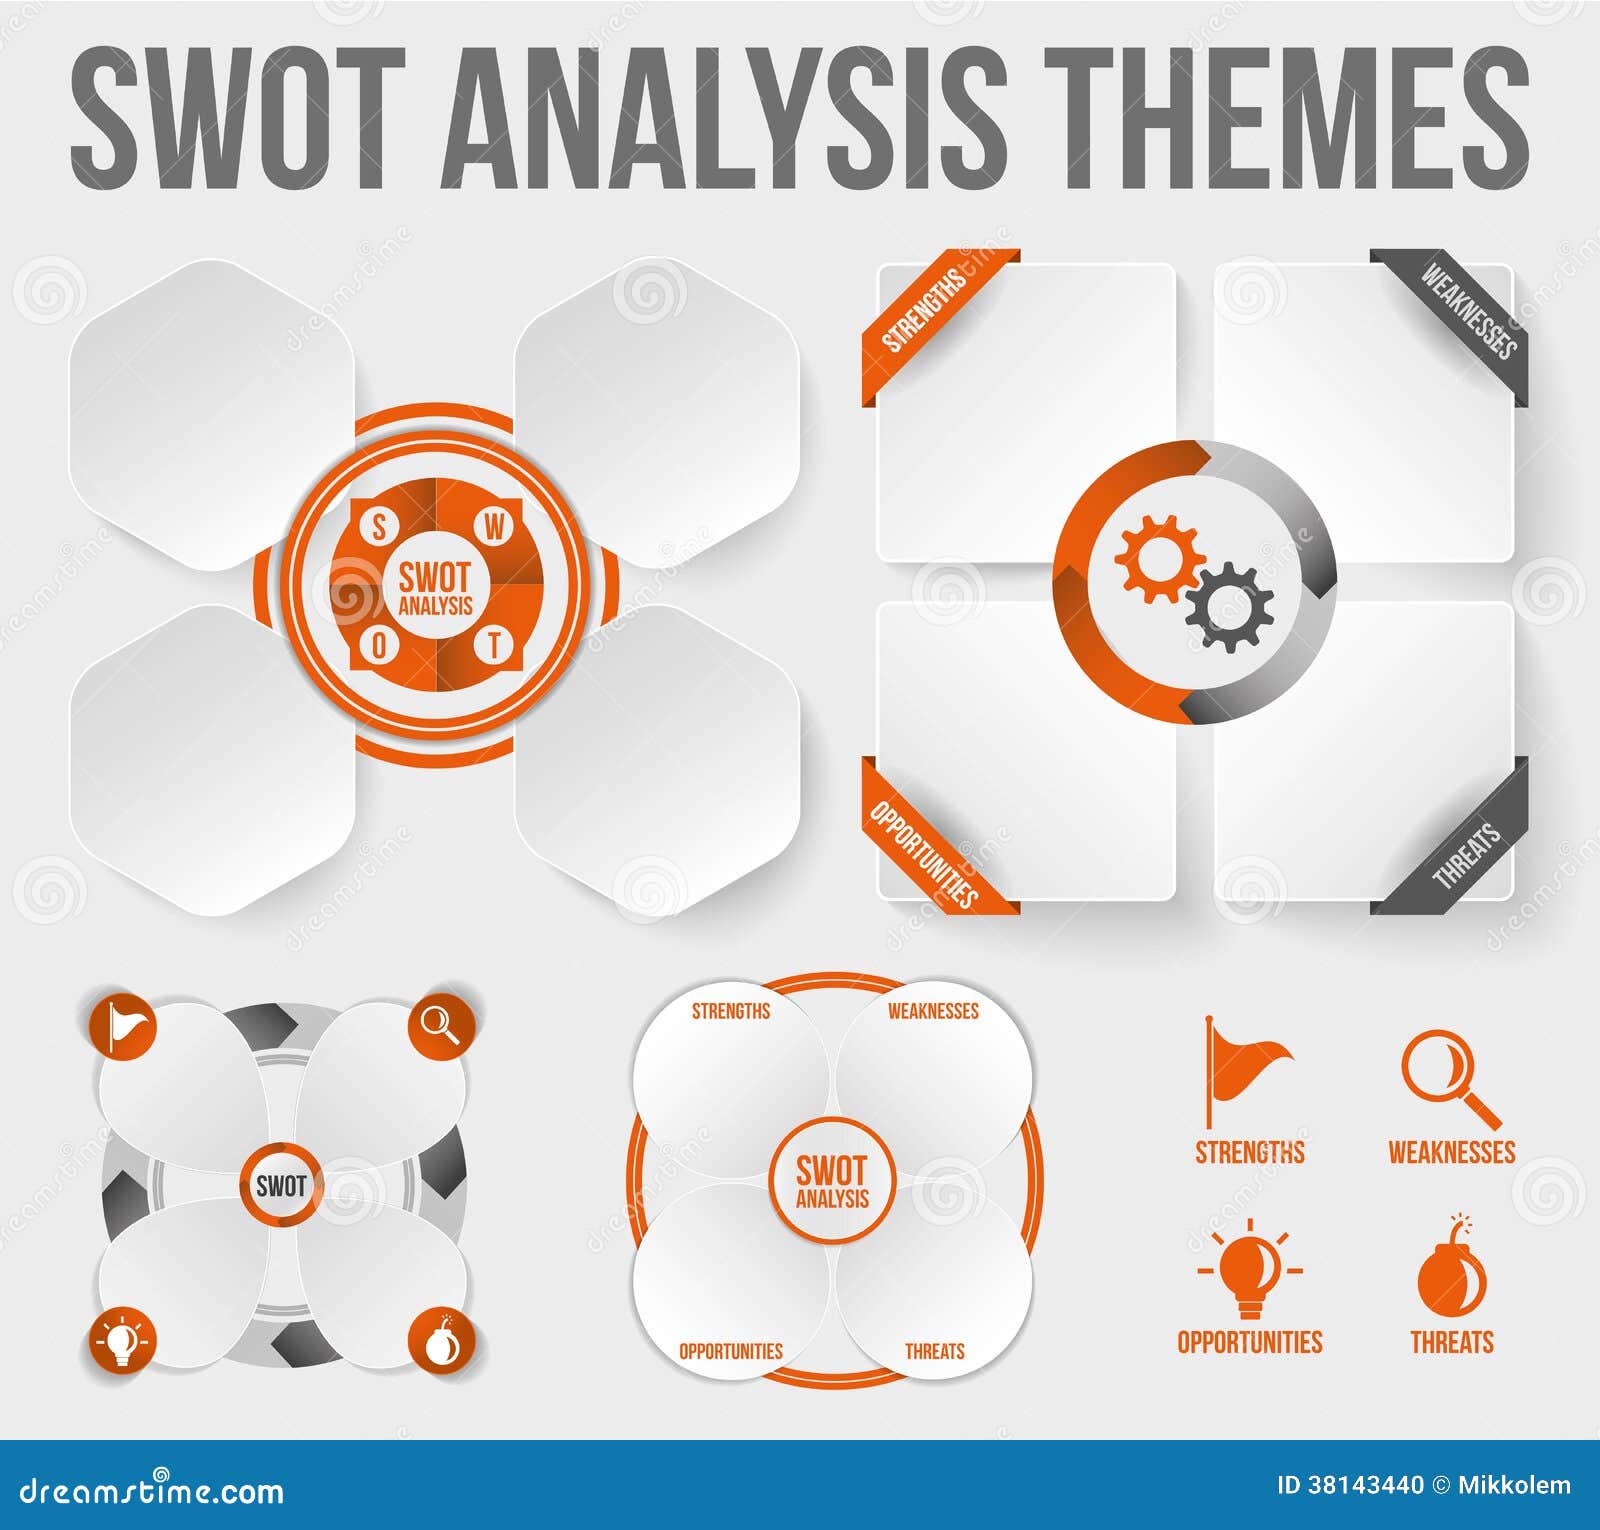 Swot Analysis Themes